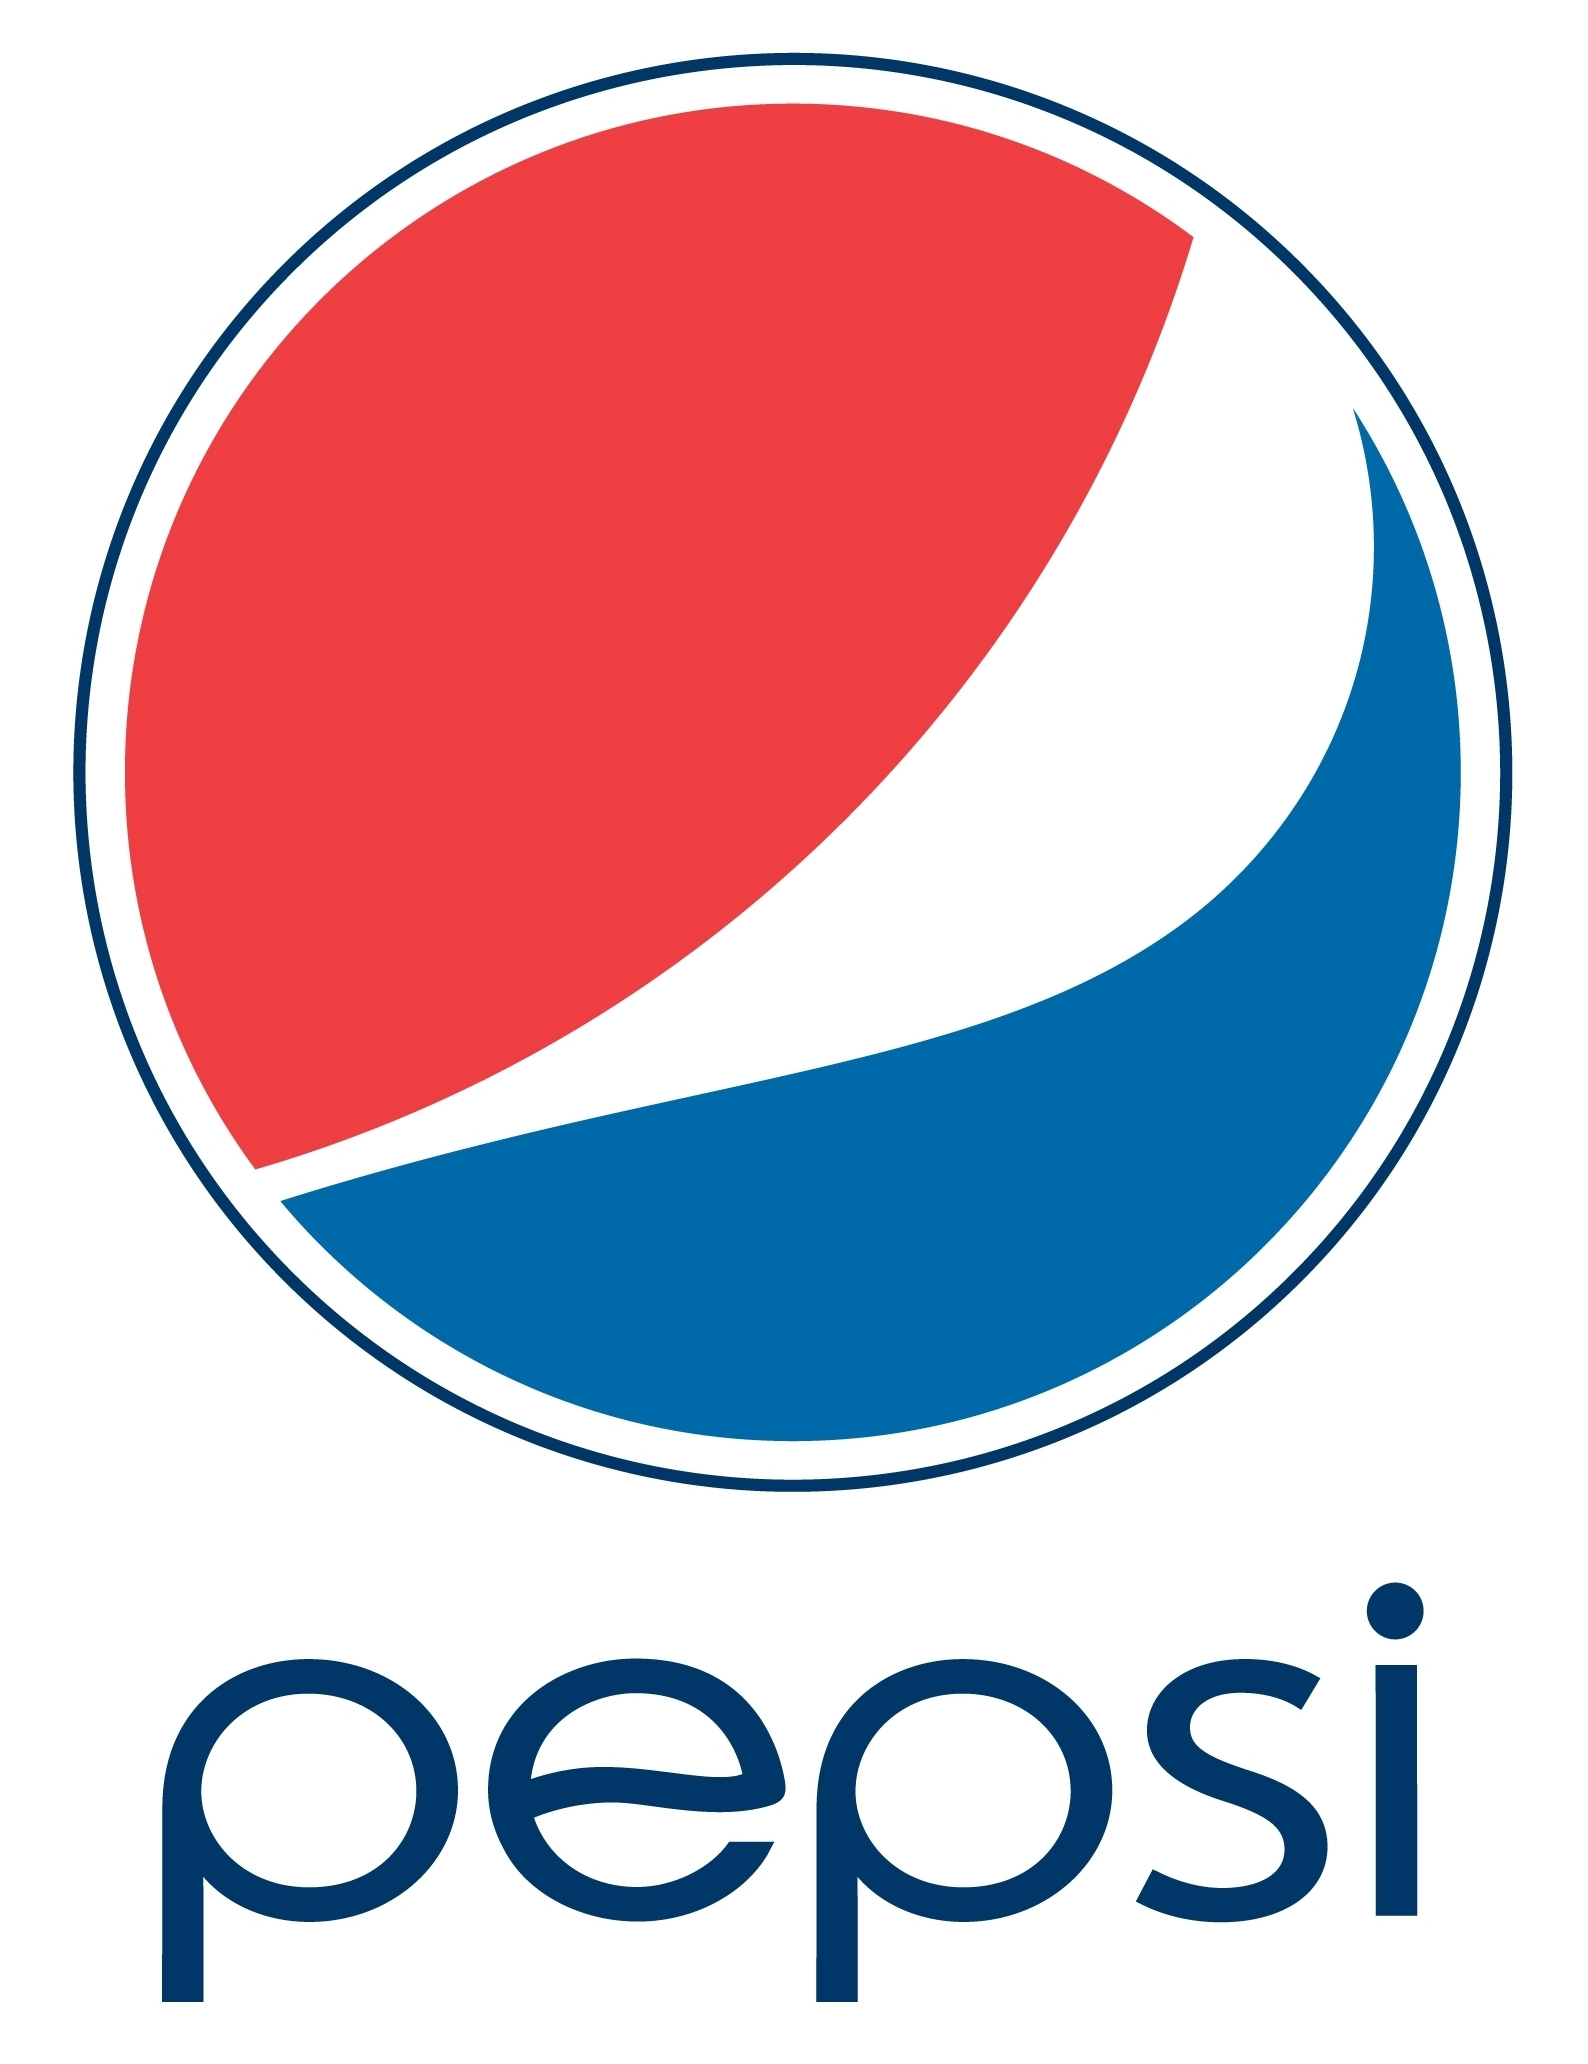 Pepsi like machine